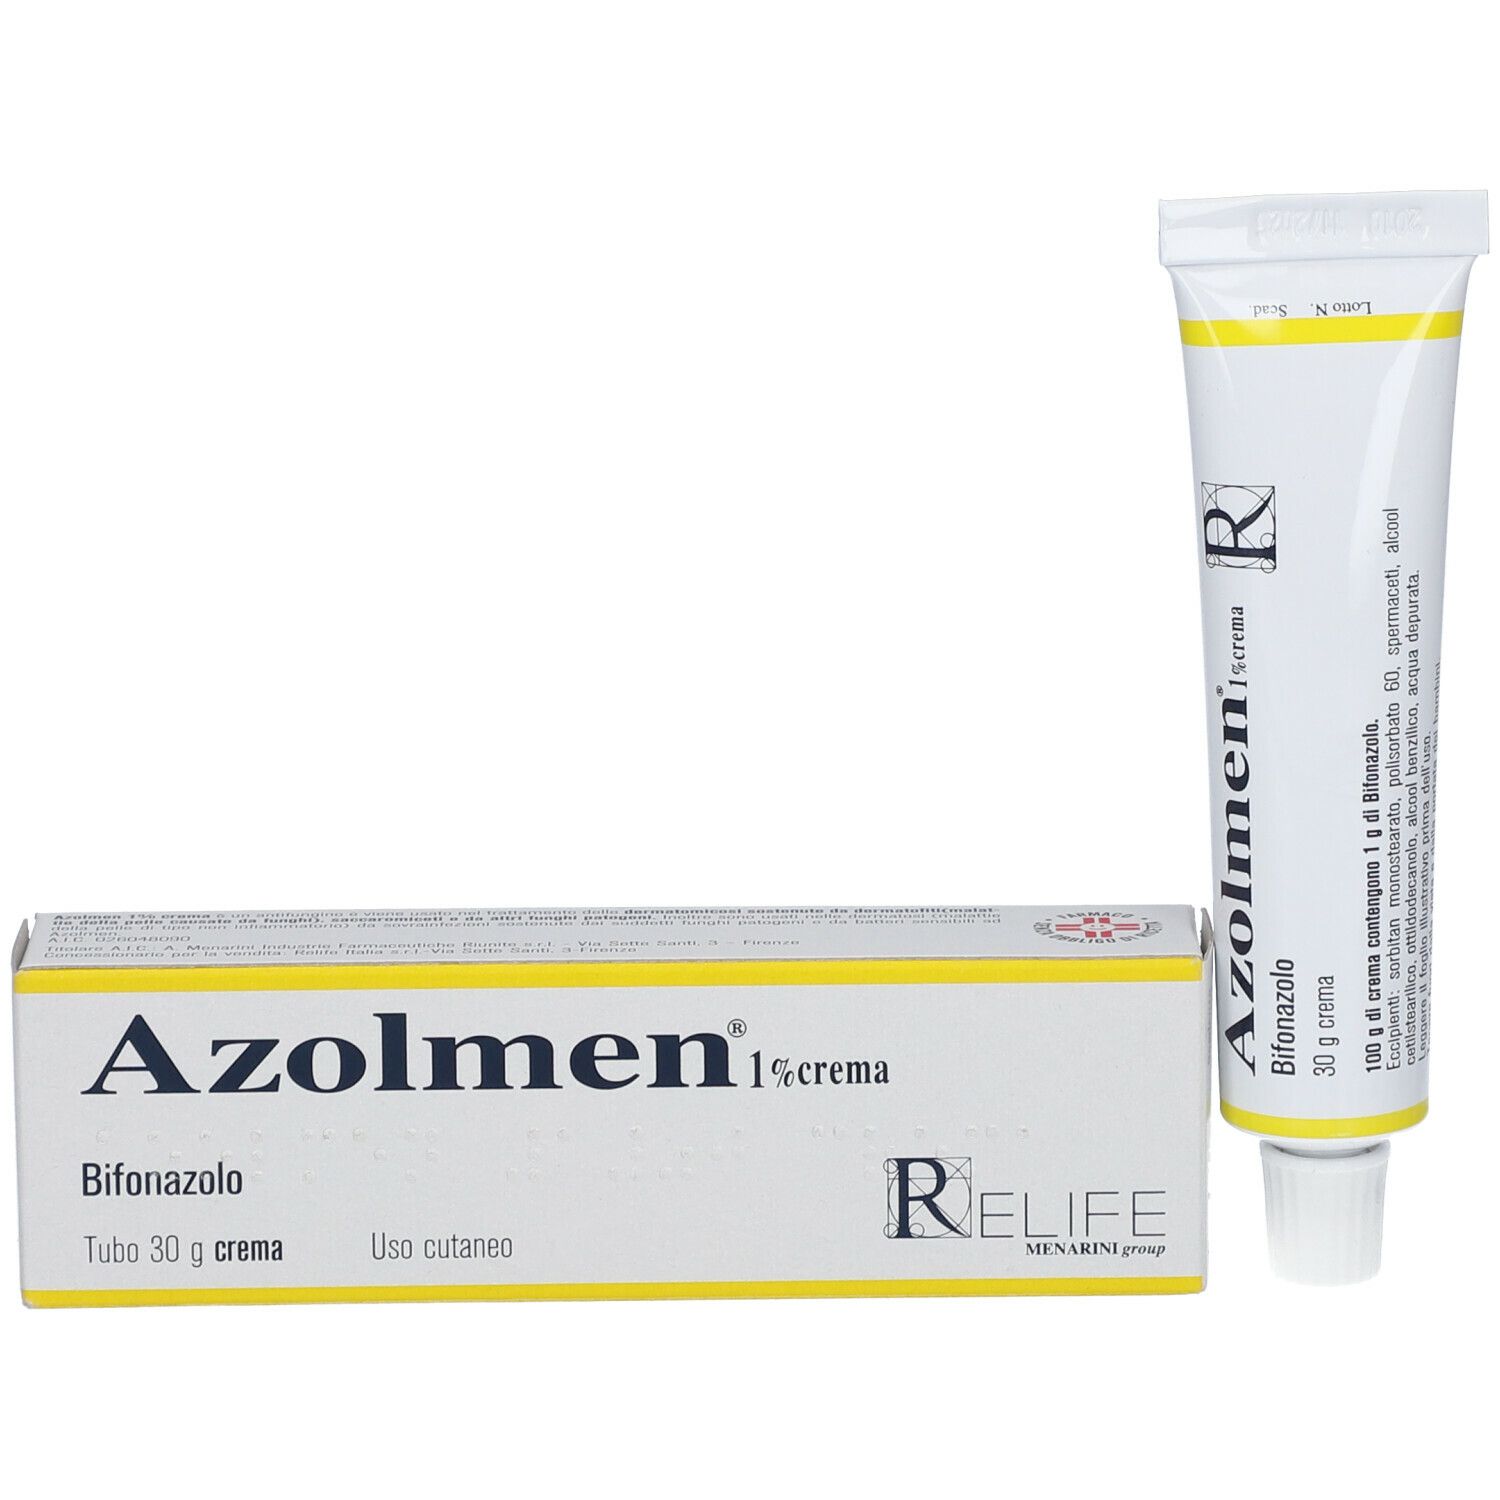 Azolmen® 1% Crema